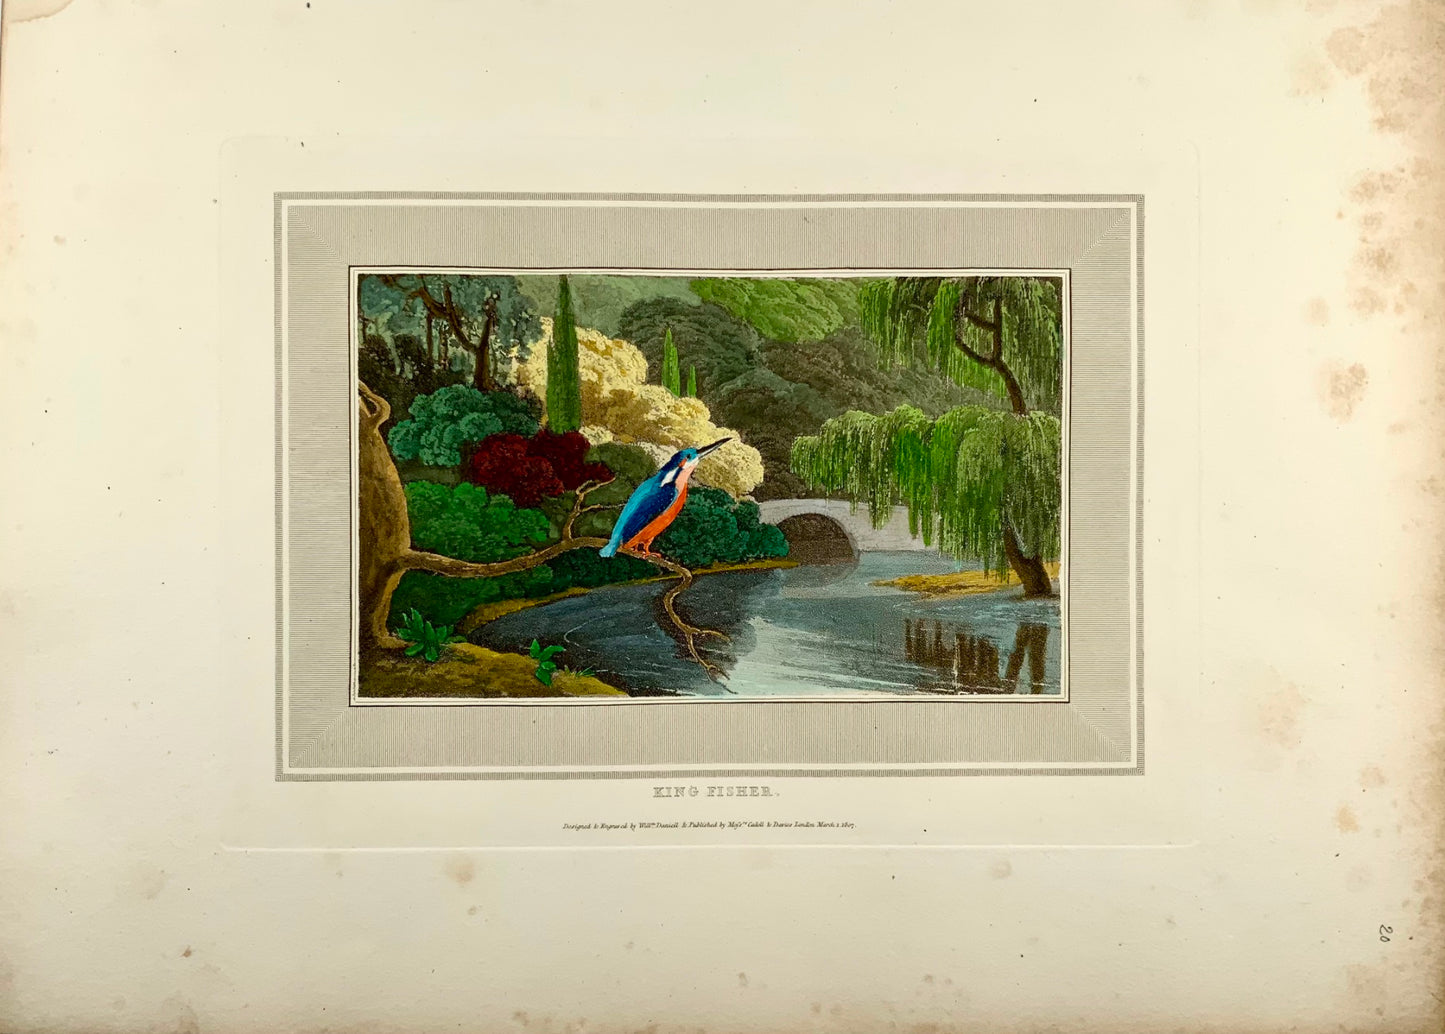 1807 William Daniell, Kingfisher, ornithology, hand coloured aquatint